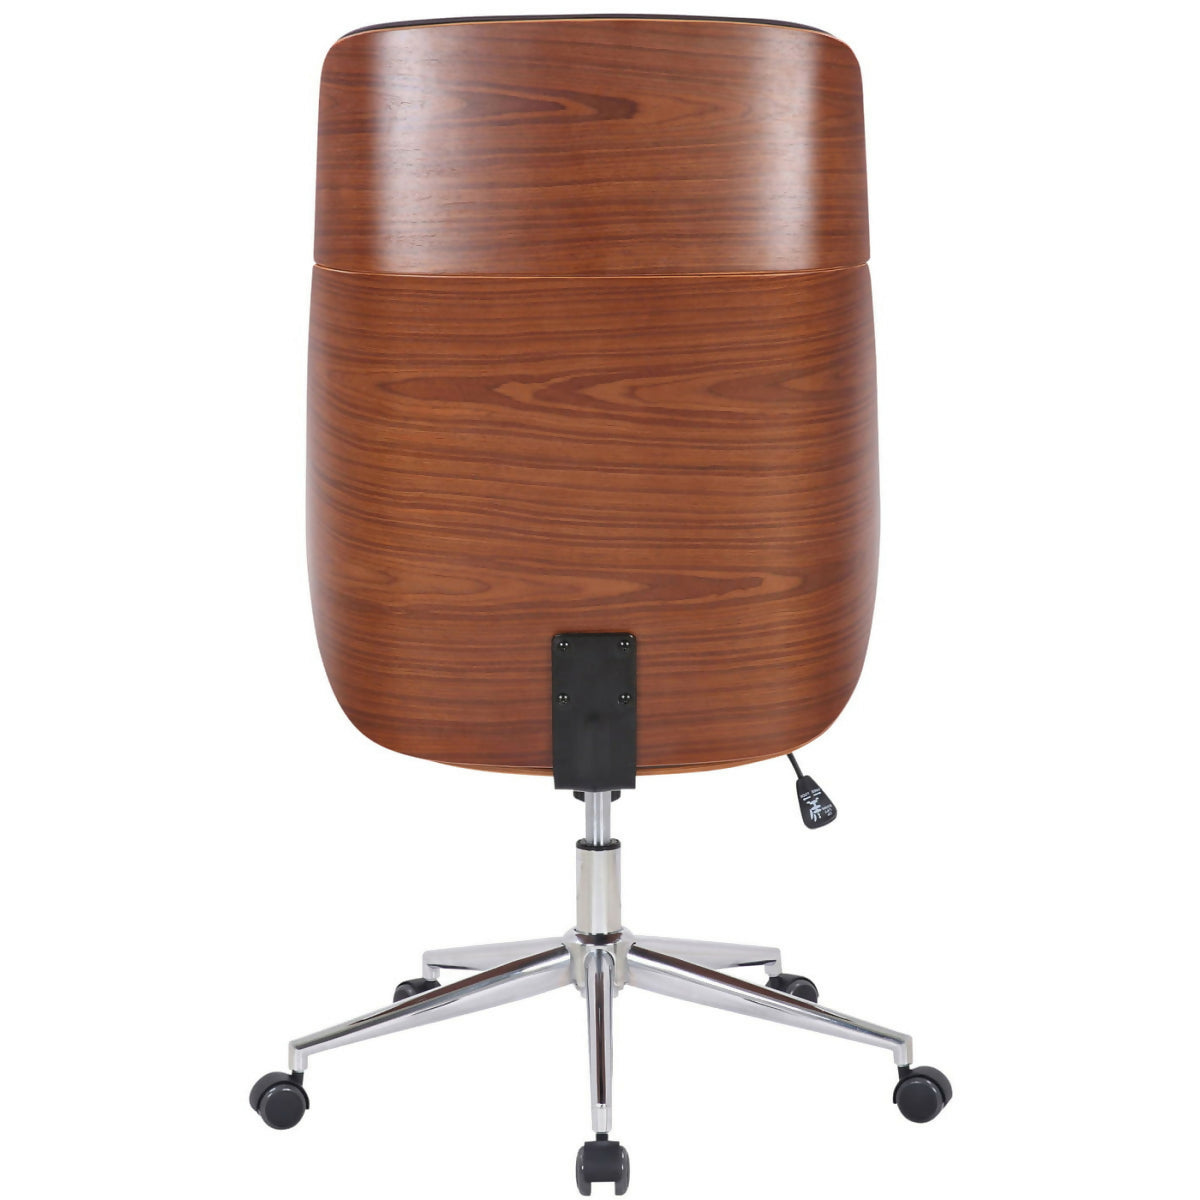 Varel office armchair - Walnut - brown